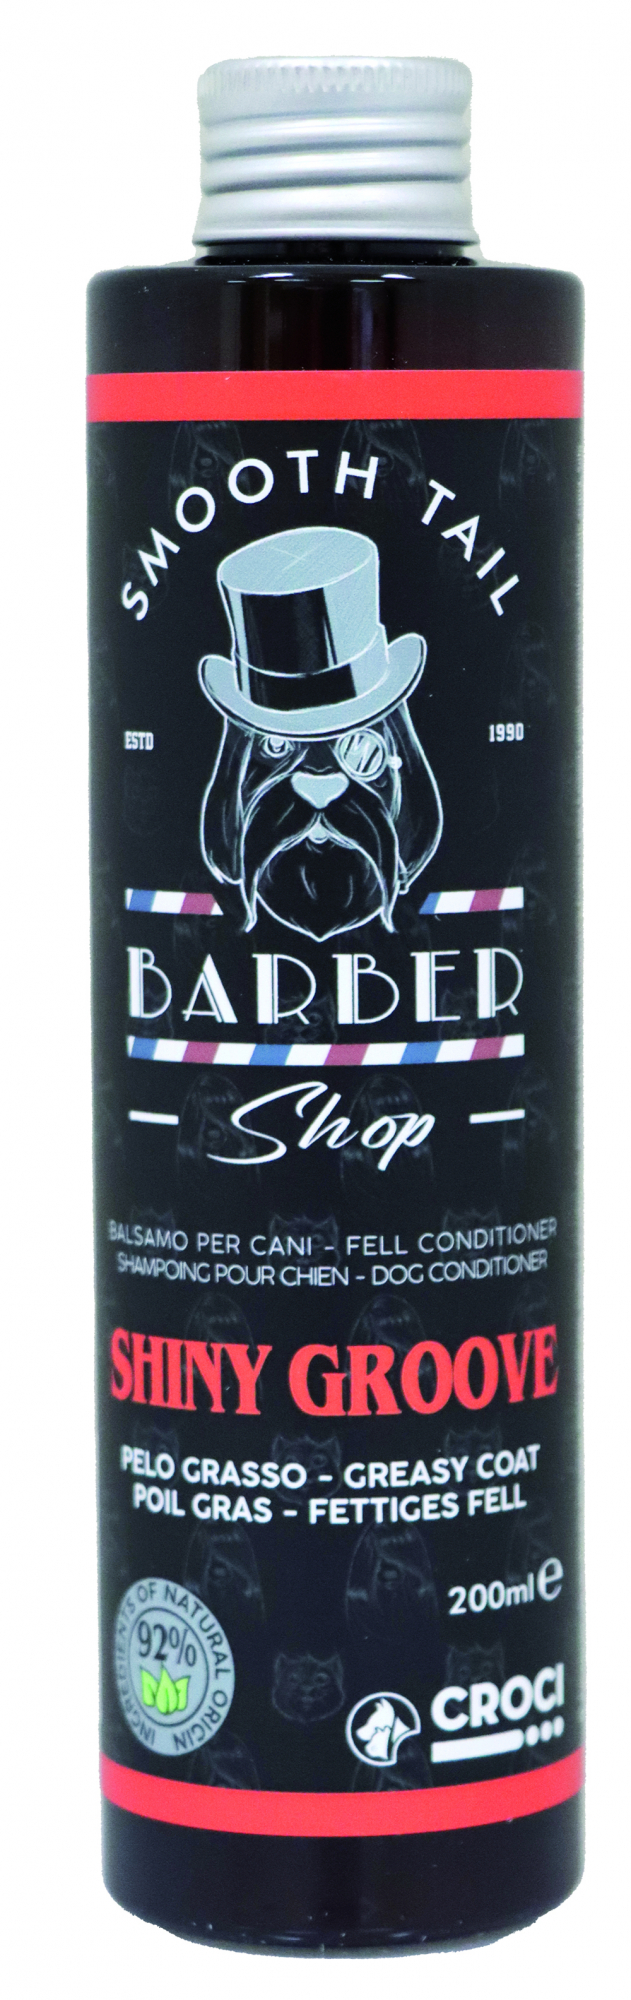 Shampooo BARBERSHOP Shiny Groove für Hunde mit fettigem Fell